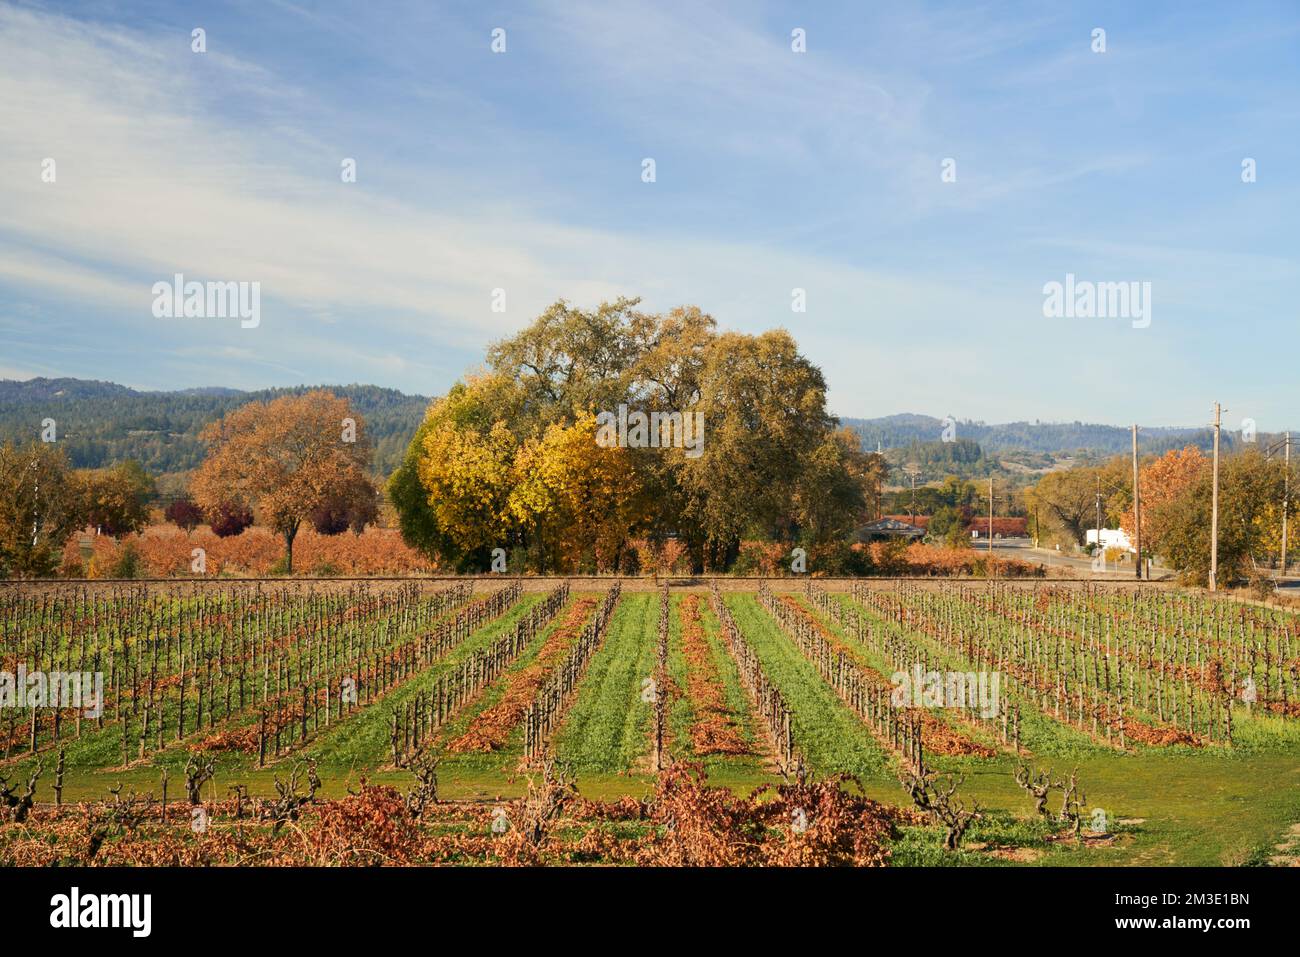 Vineyard in autumn in rural Windsor, California. Stock Photo